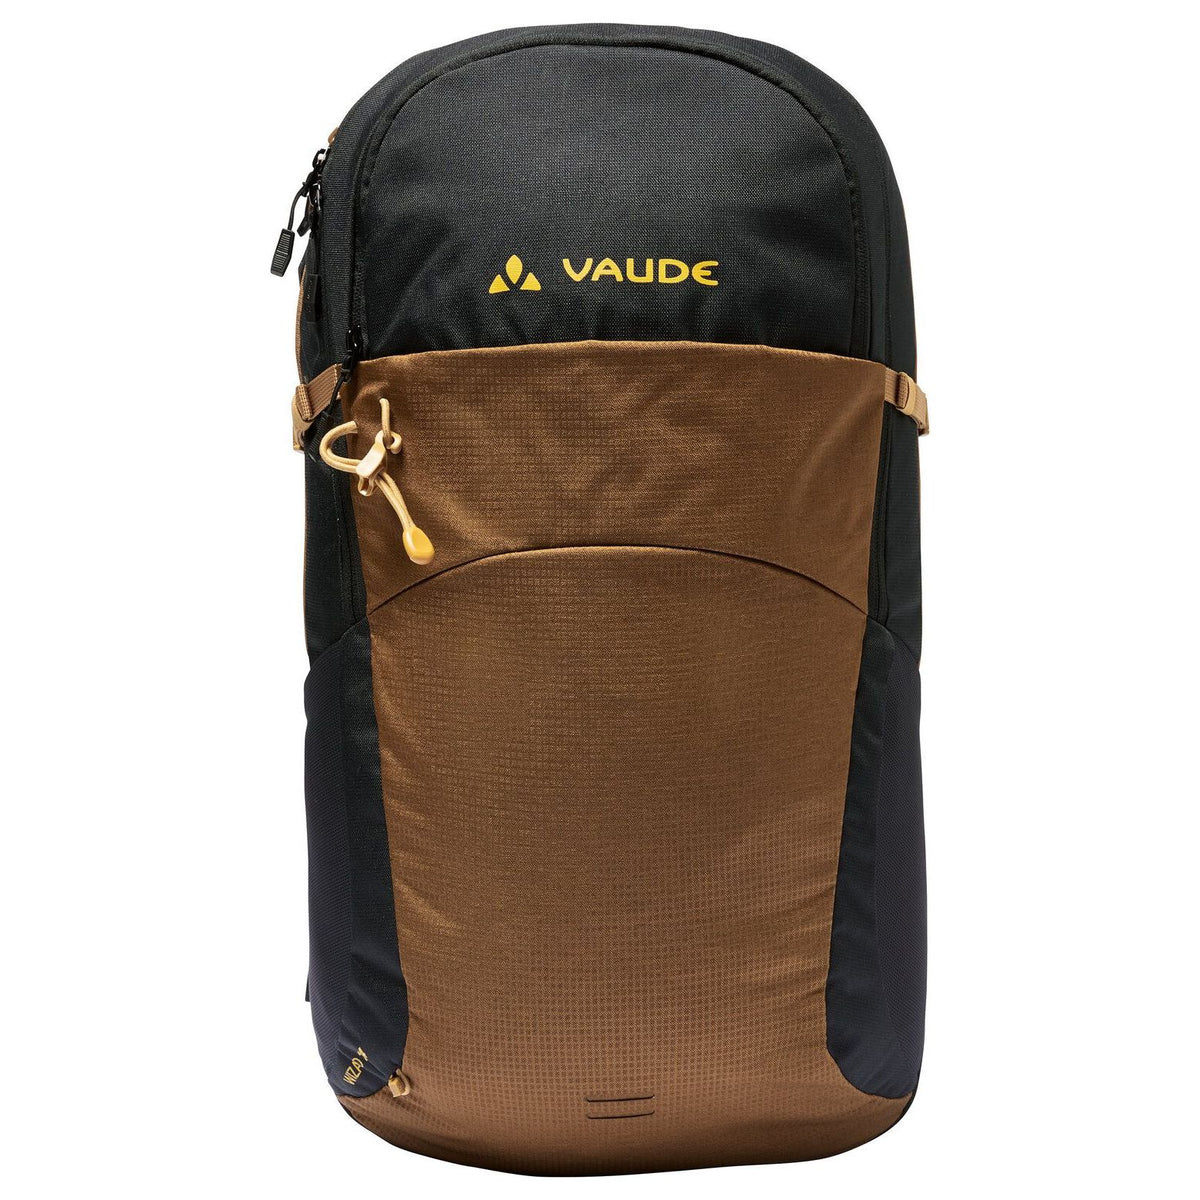 Vaude Wizard 24+4 Hiking Backpack - Black/Umbra